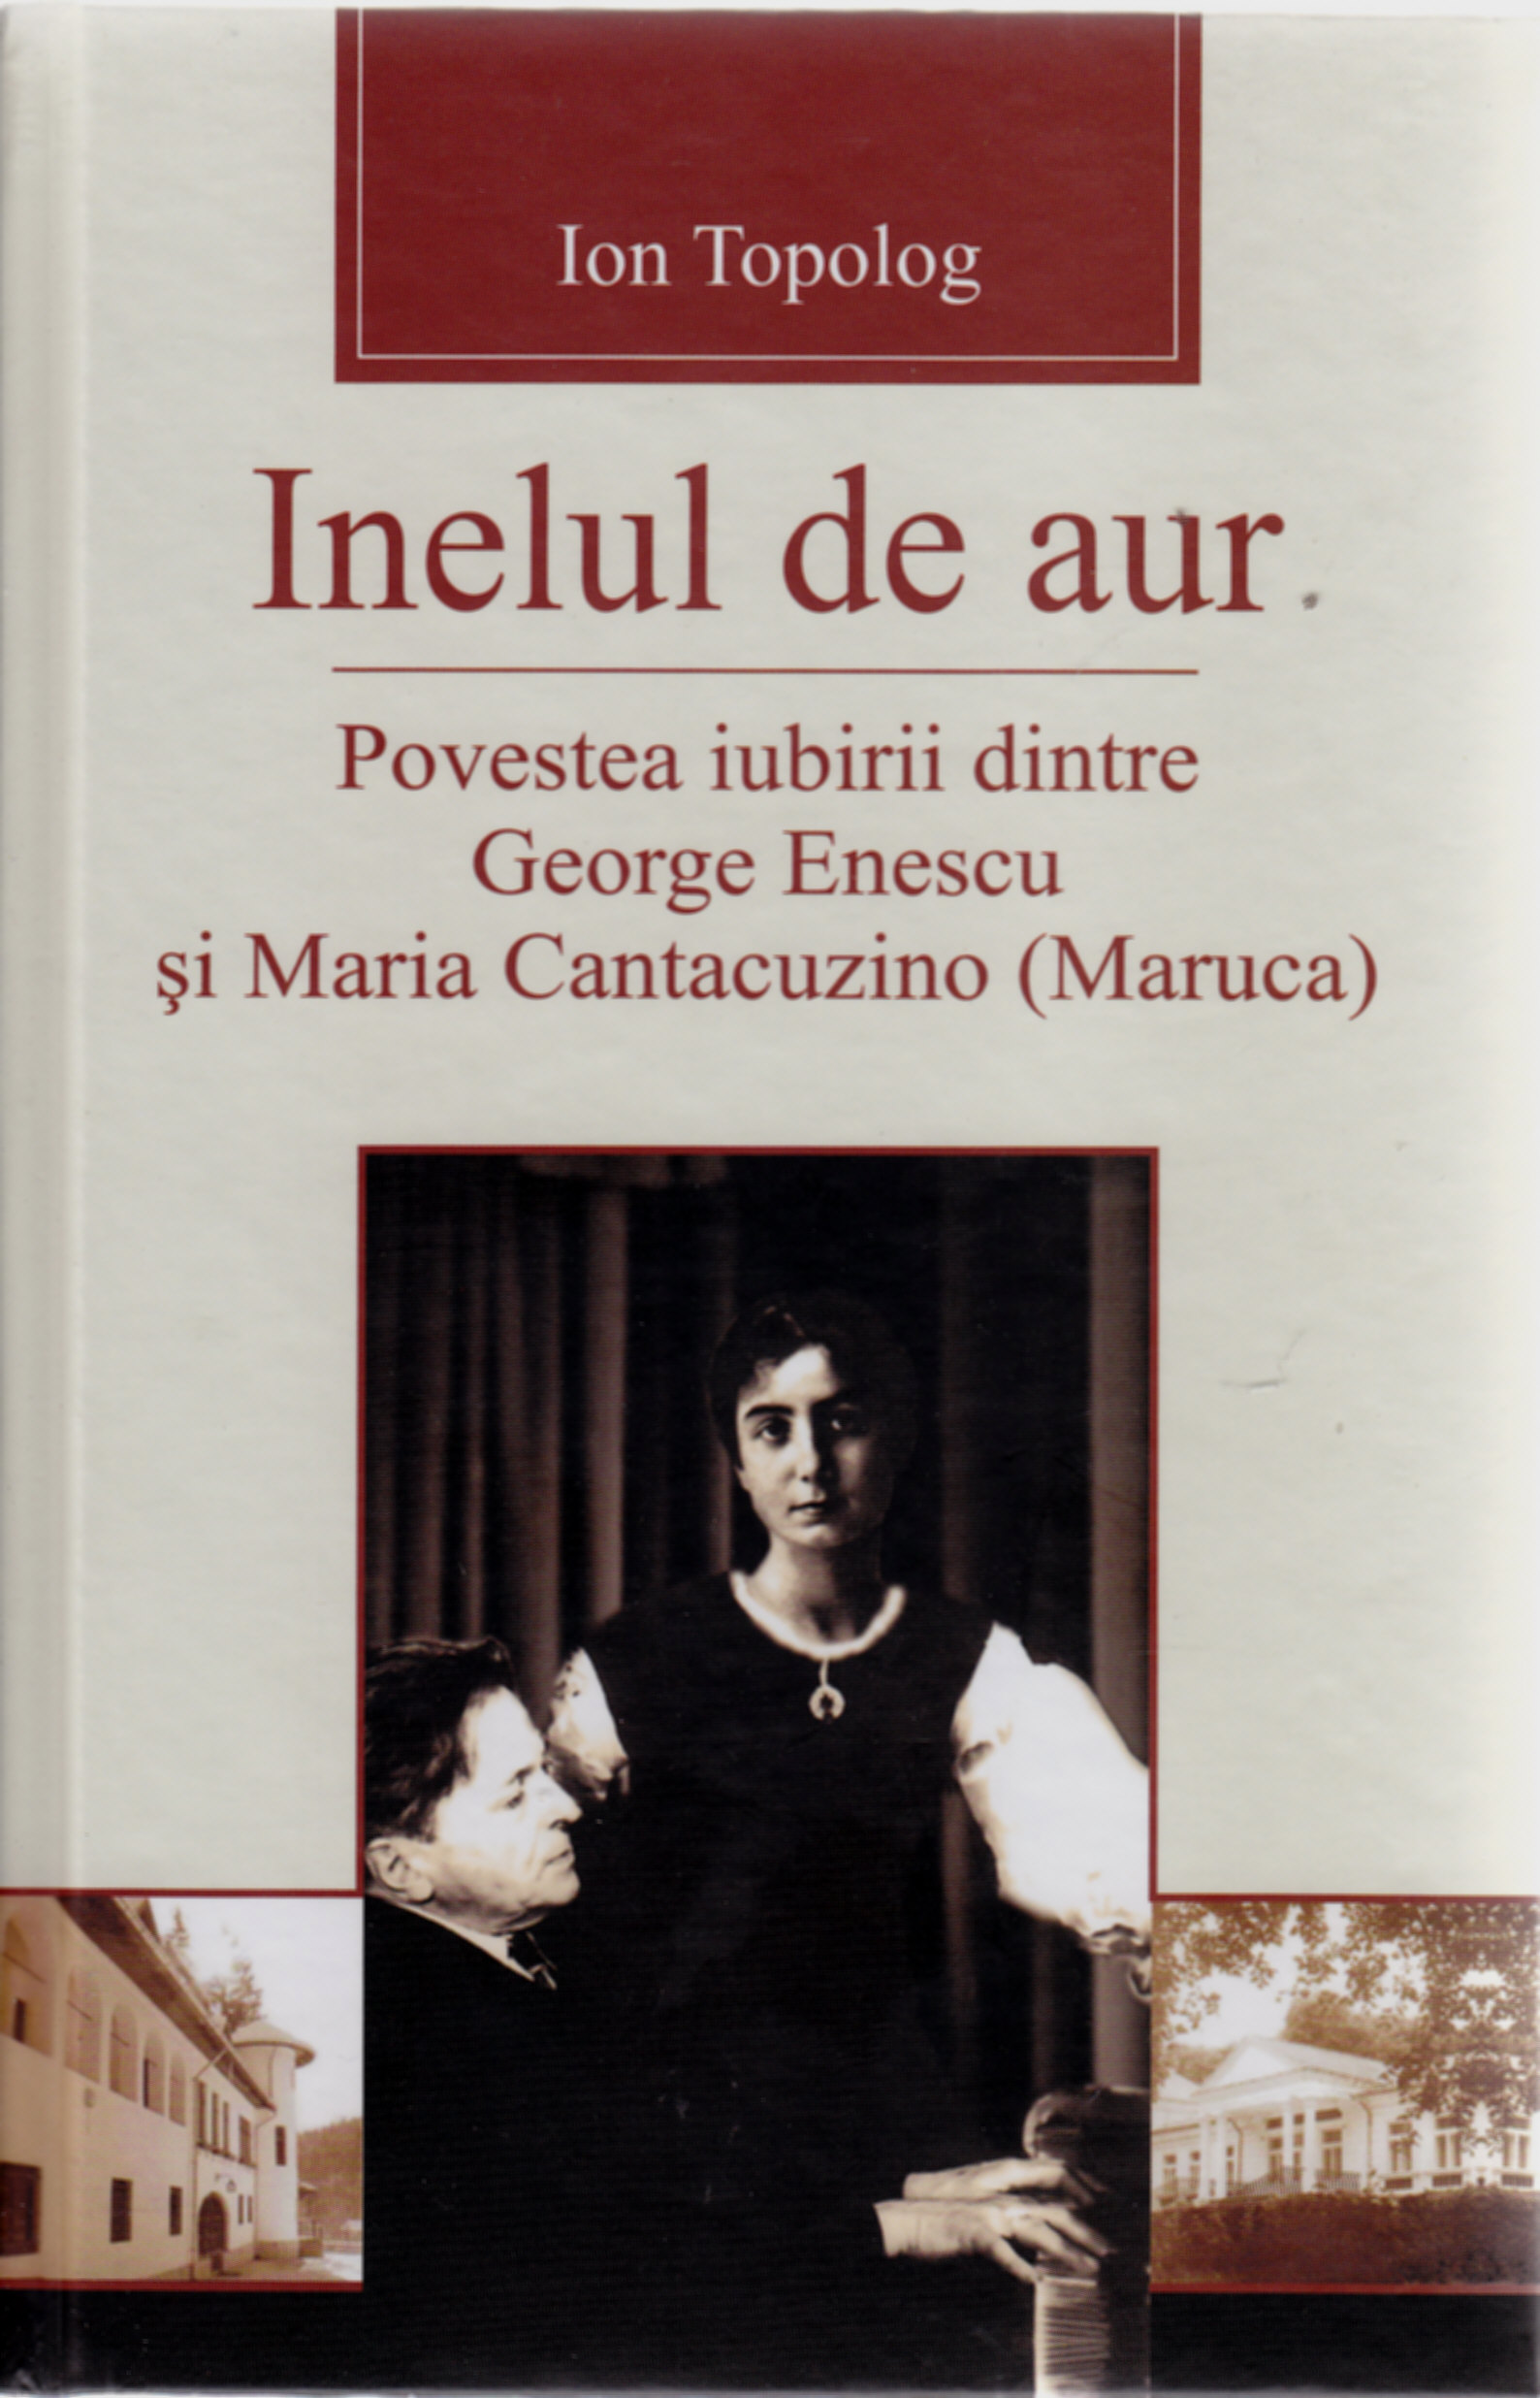 Inelul de aur. Povestea iubirii dintre George Enescu si Maria Cantacuzino - Ion Topolog